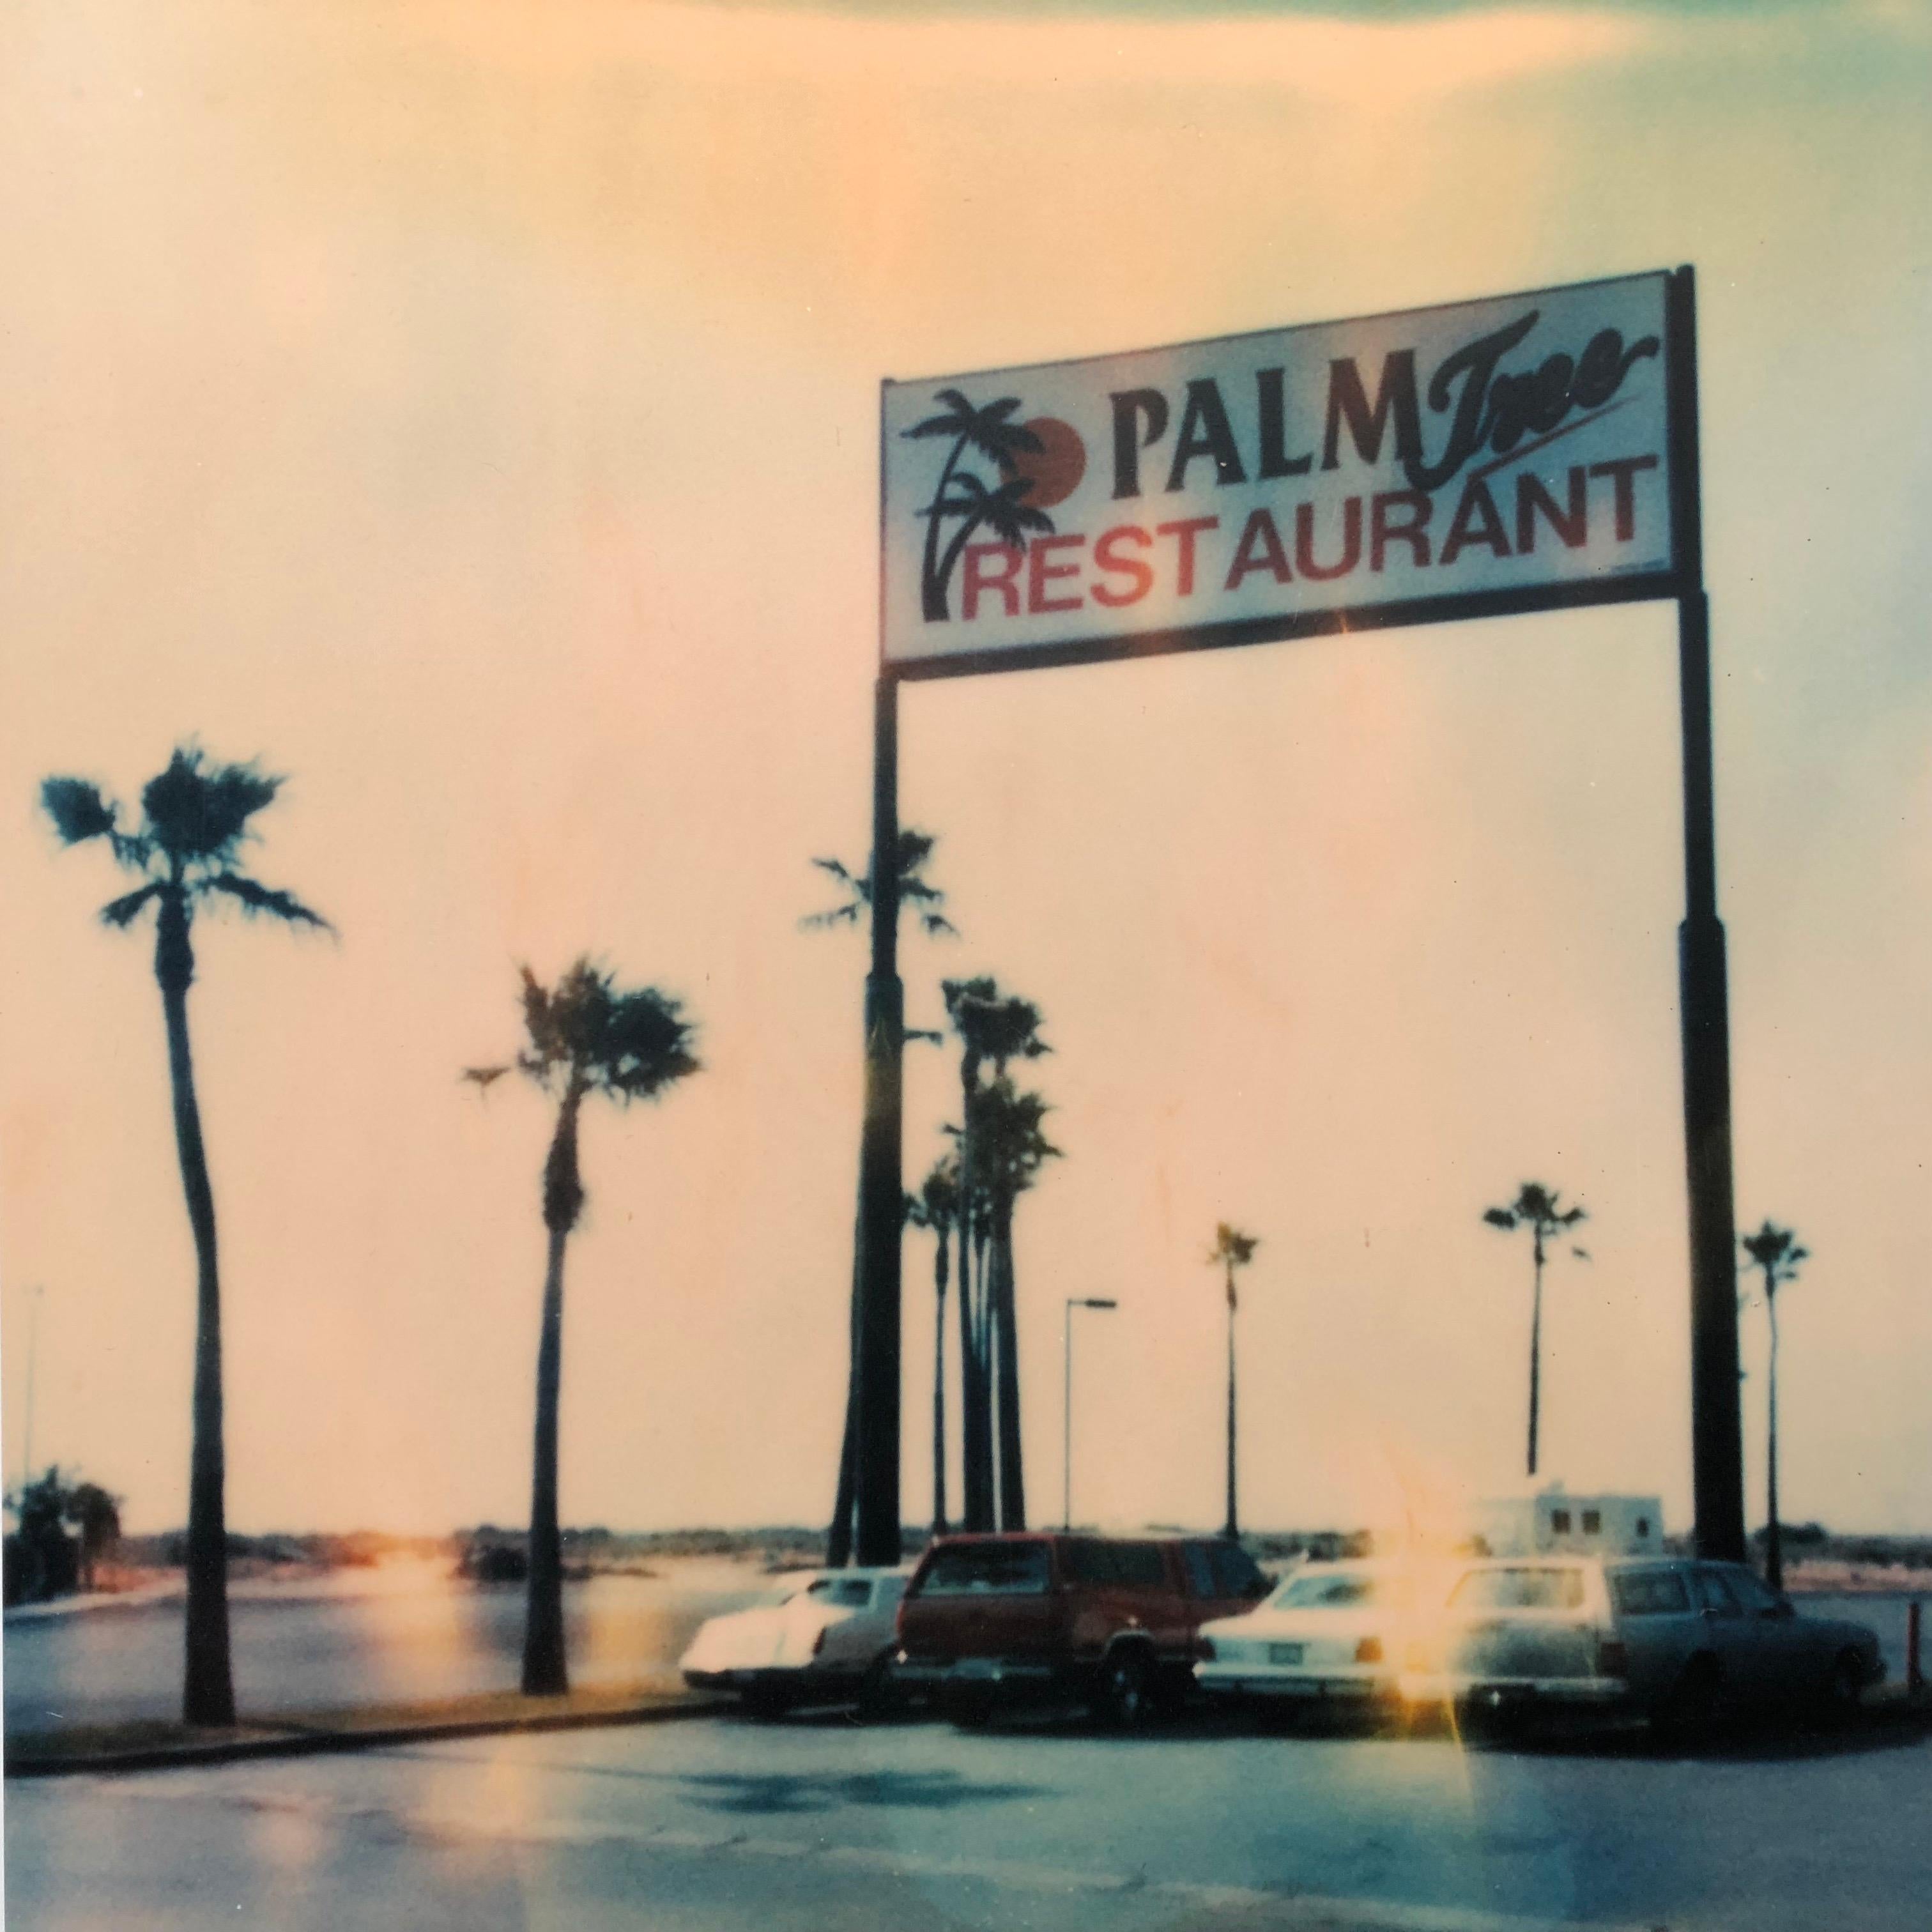 Palm Tree Restaurant (The Last Picture Show) - Beige Color Photograph by Stefanie Schneider